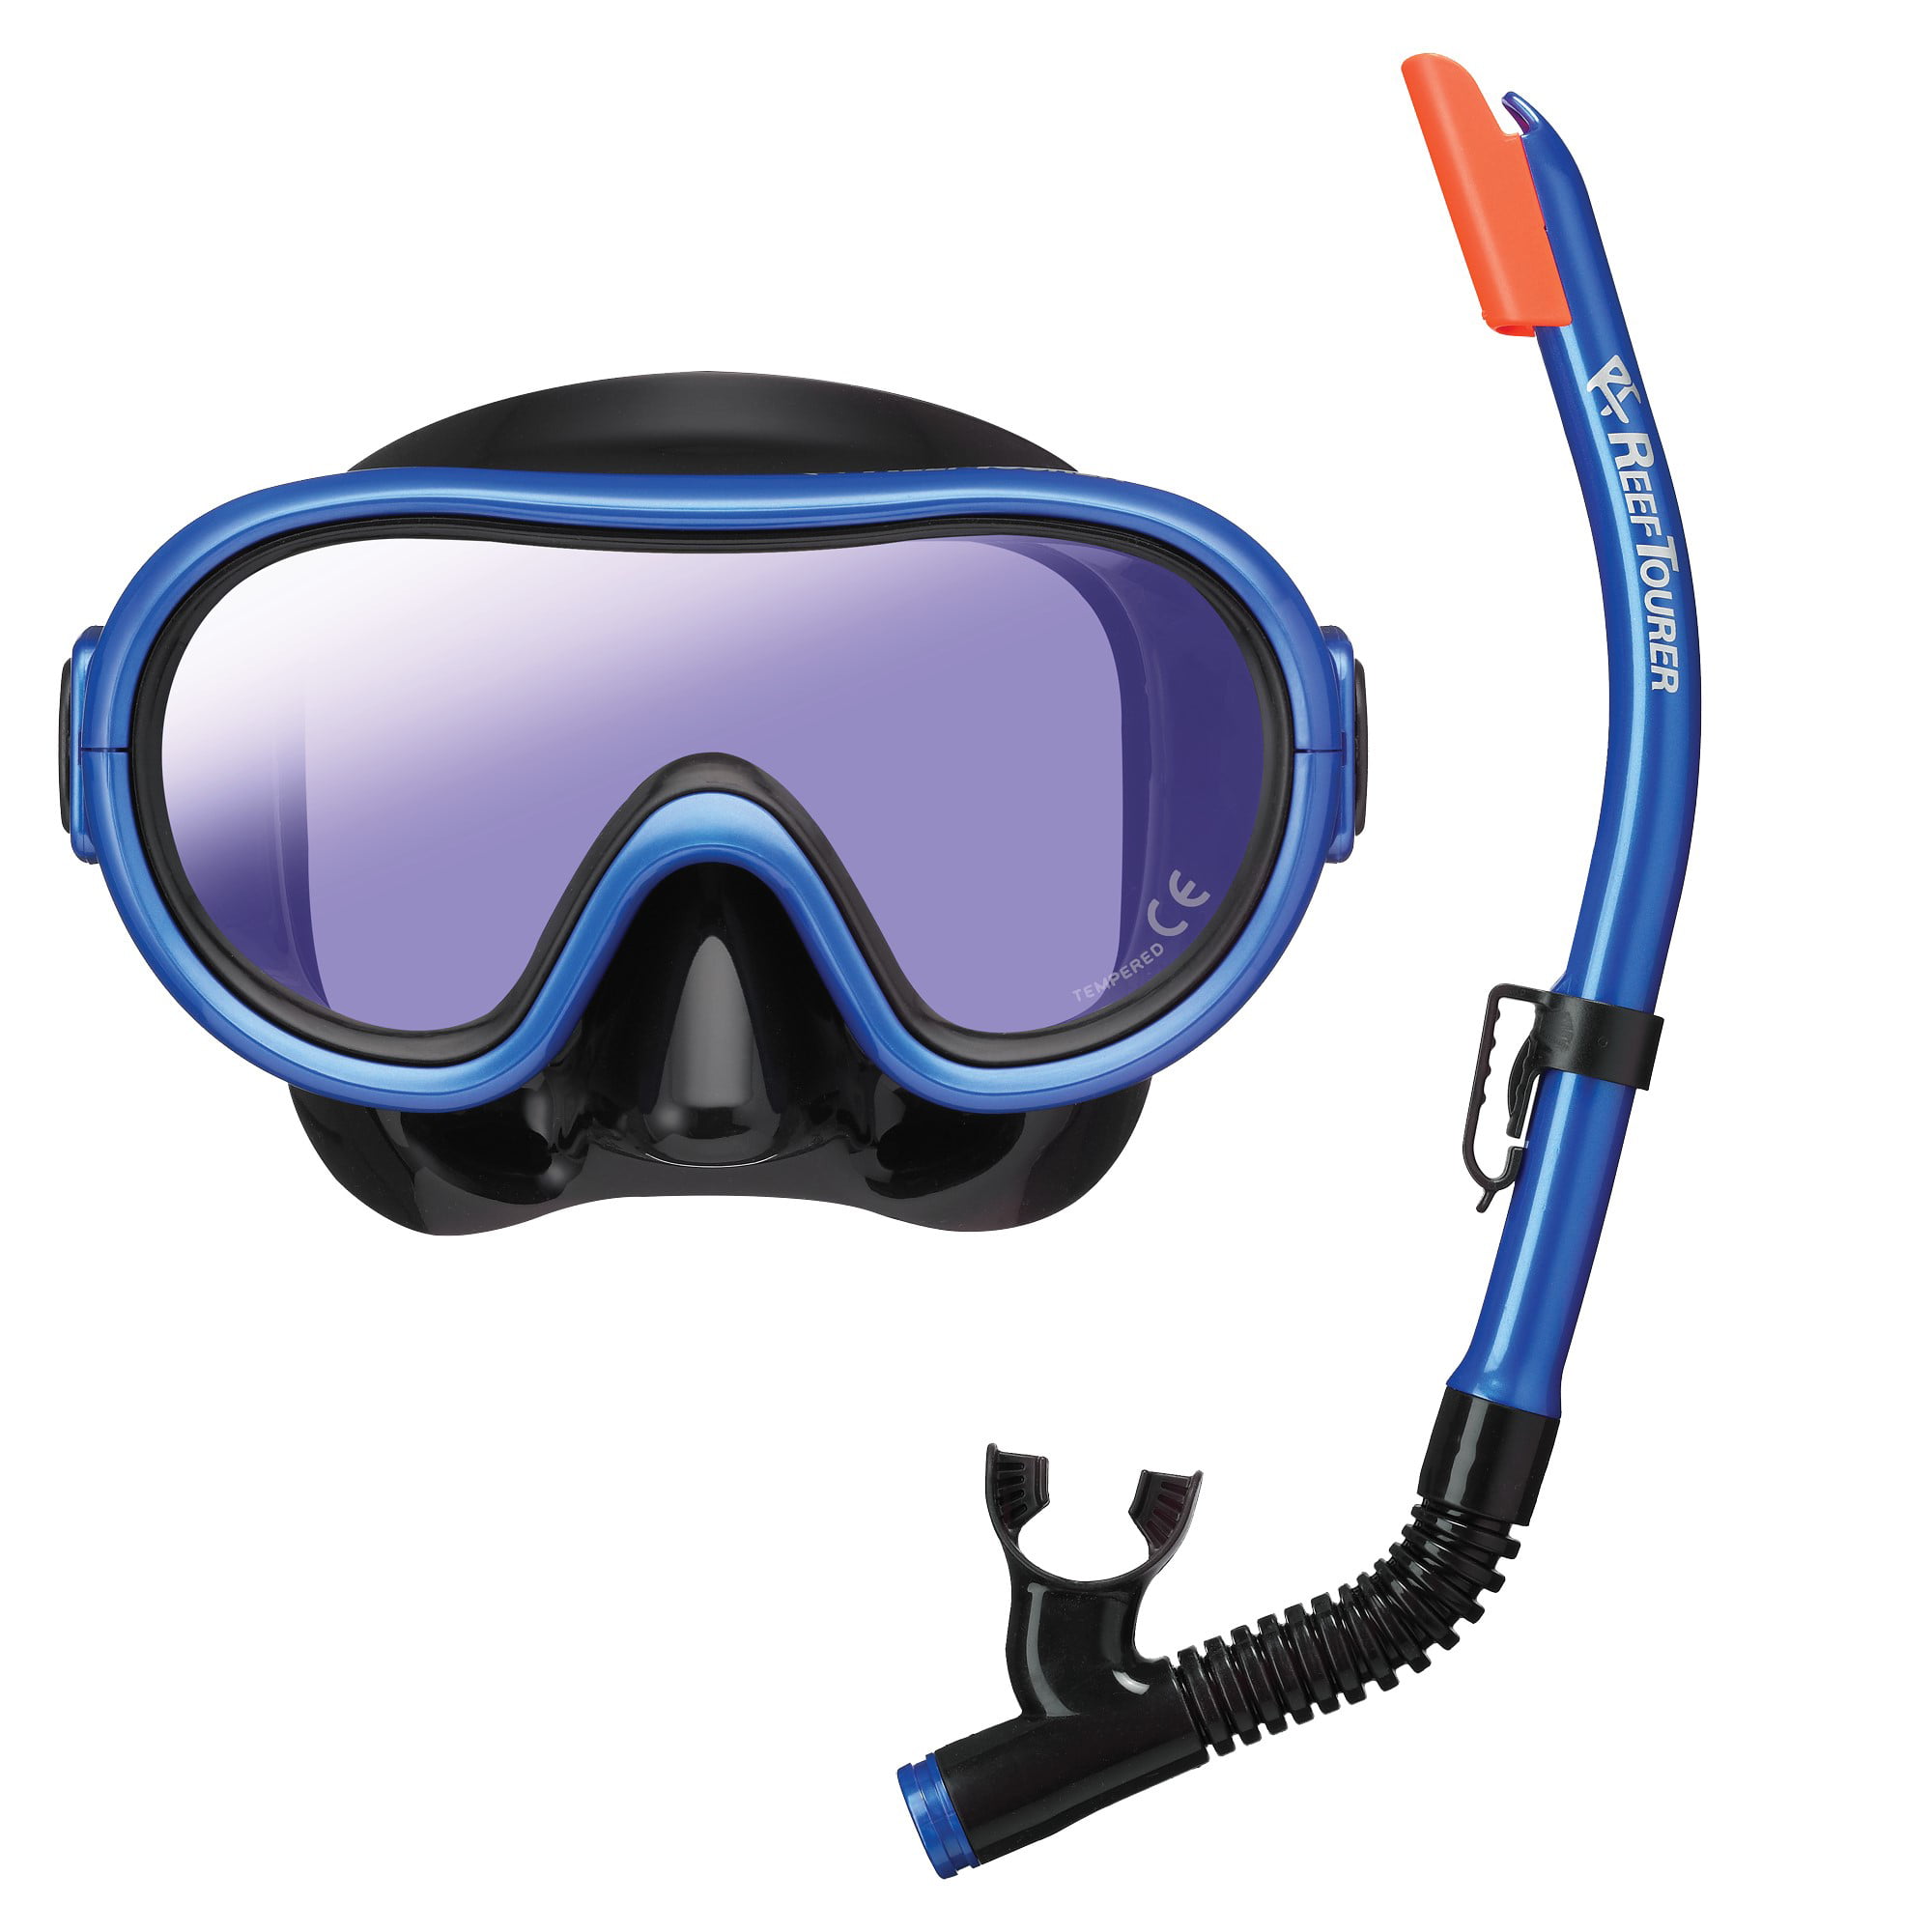 Set Kit Mascara Snorkel Fit Traveler 2 National Geographic - Explorer Pro  Shop